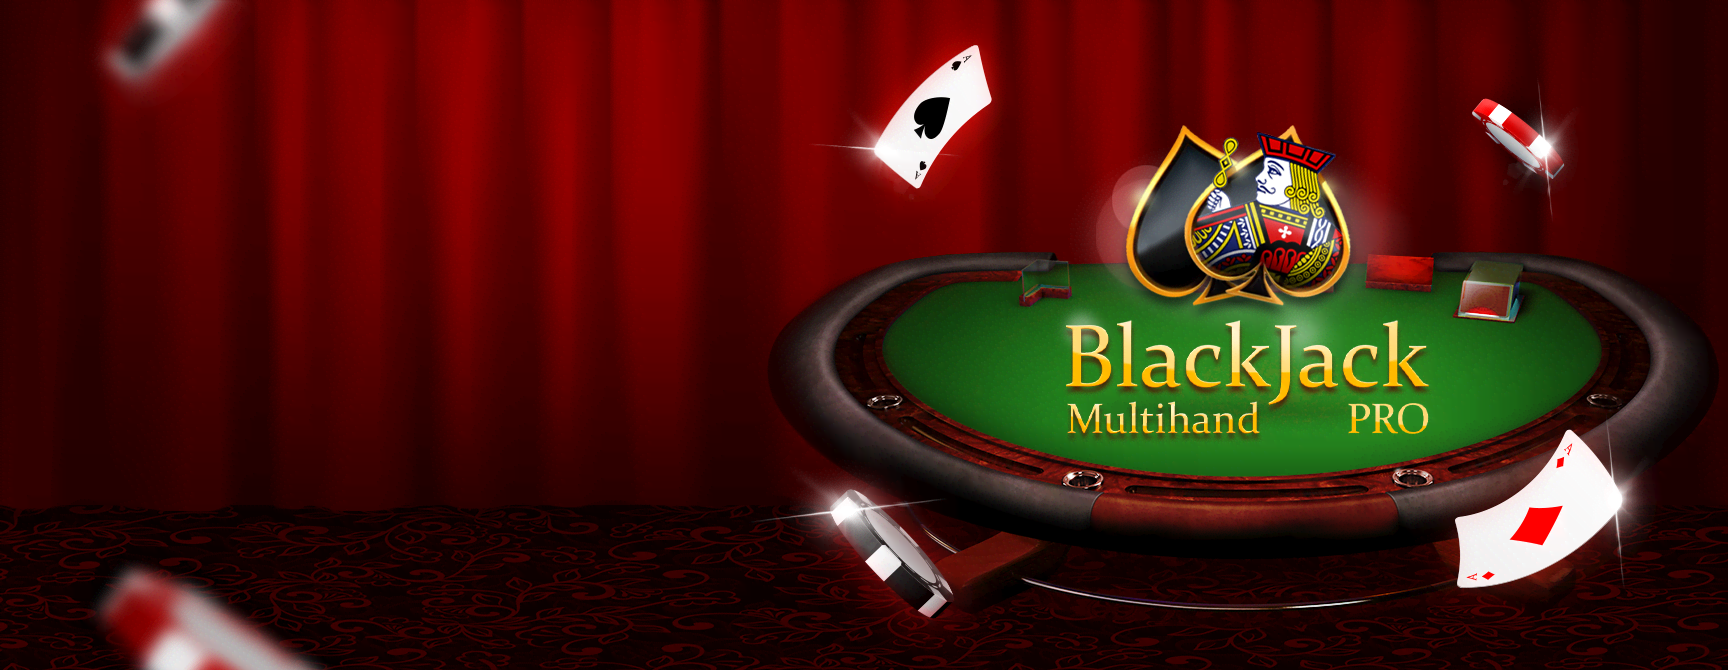 Multihand Blackjack Pro: A Comprehensive Review